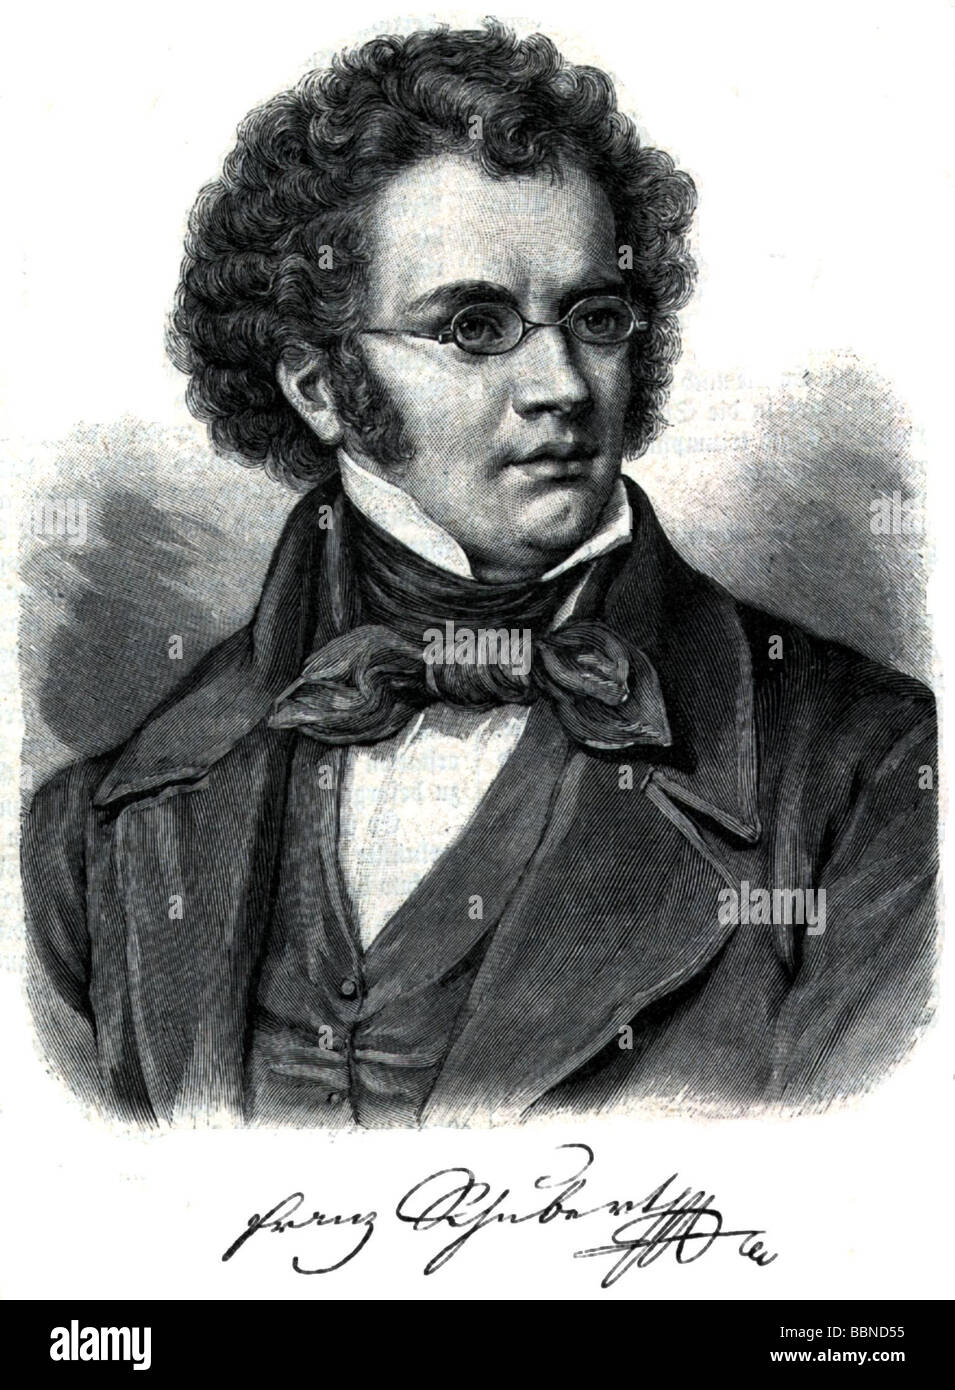 Schubert, Franz, 31.1.1797 - 19.11.1828, Austrian composer, portrait, wood engraving, 19th century, Stock Photo